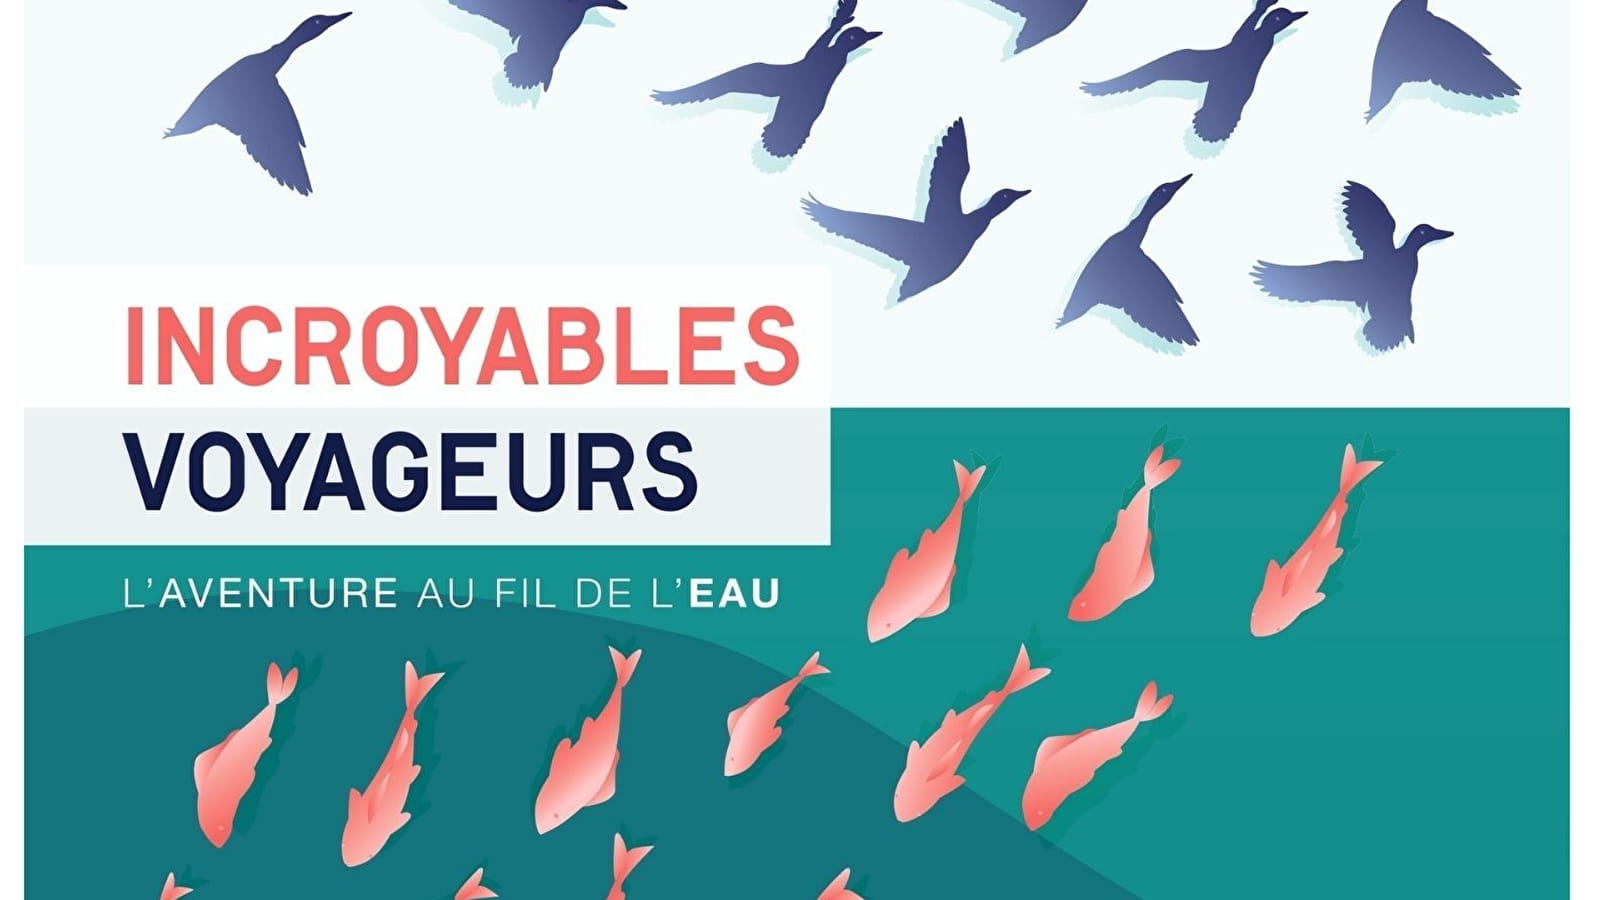 Incroyables Voyageurs' exhibition